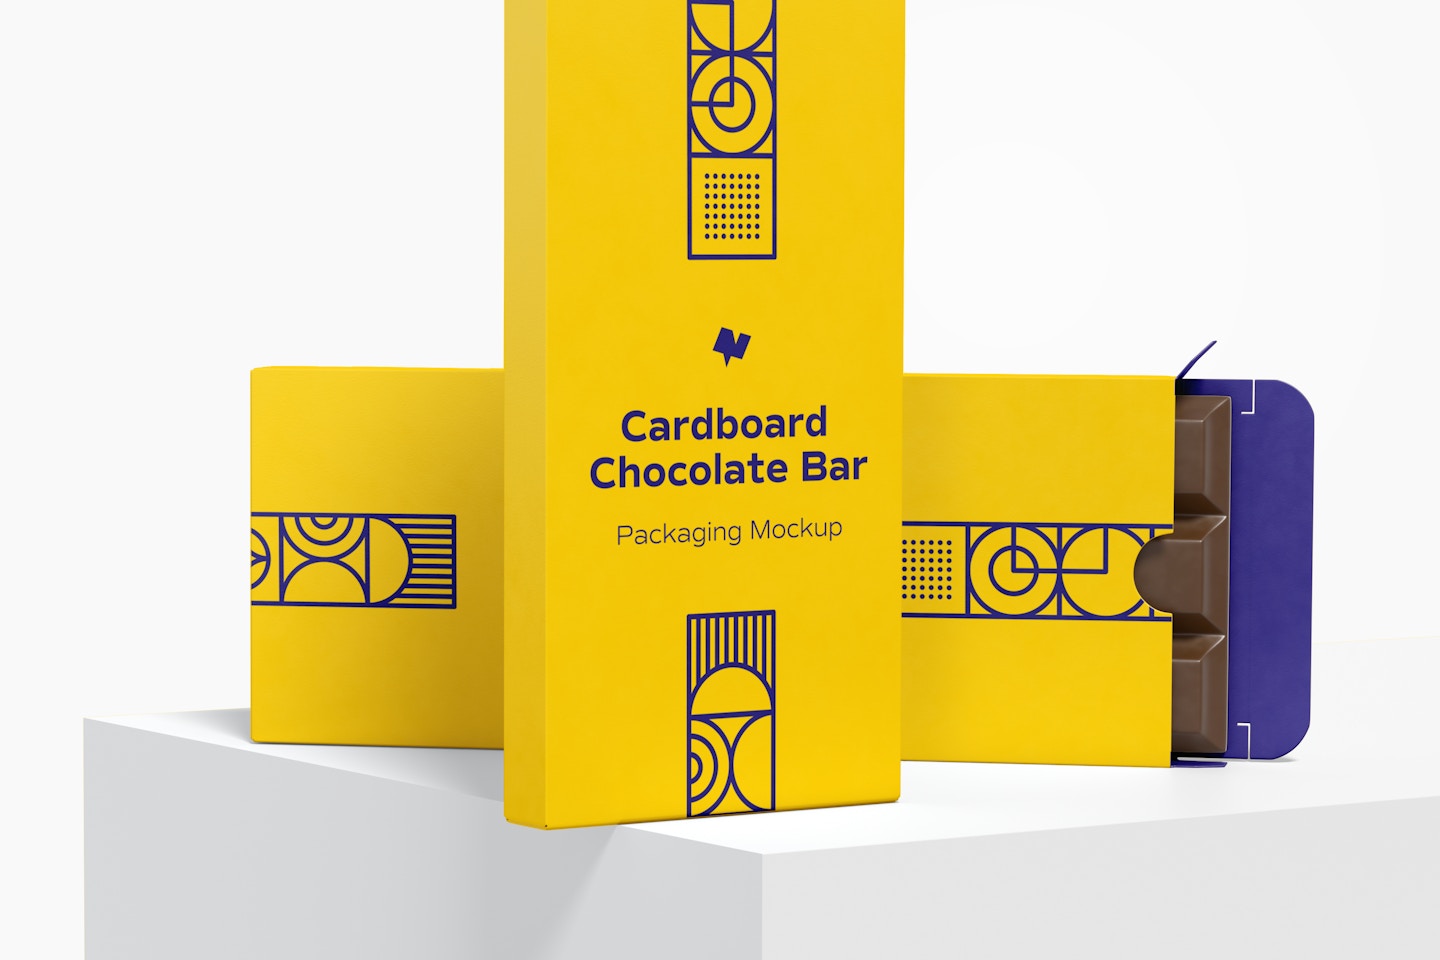 Cardboard Chocolate Bar Packaging Mockup, Dropped